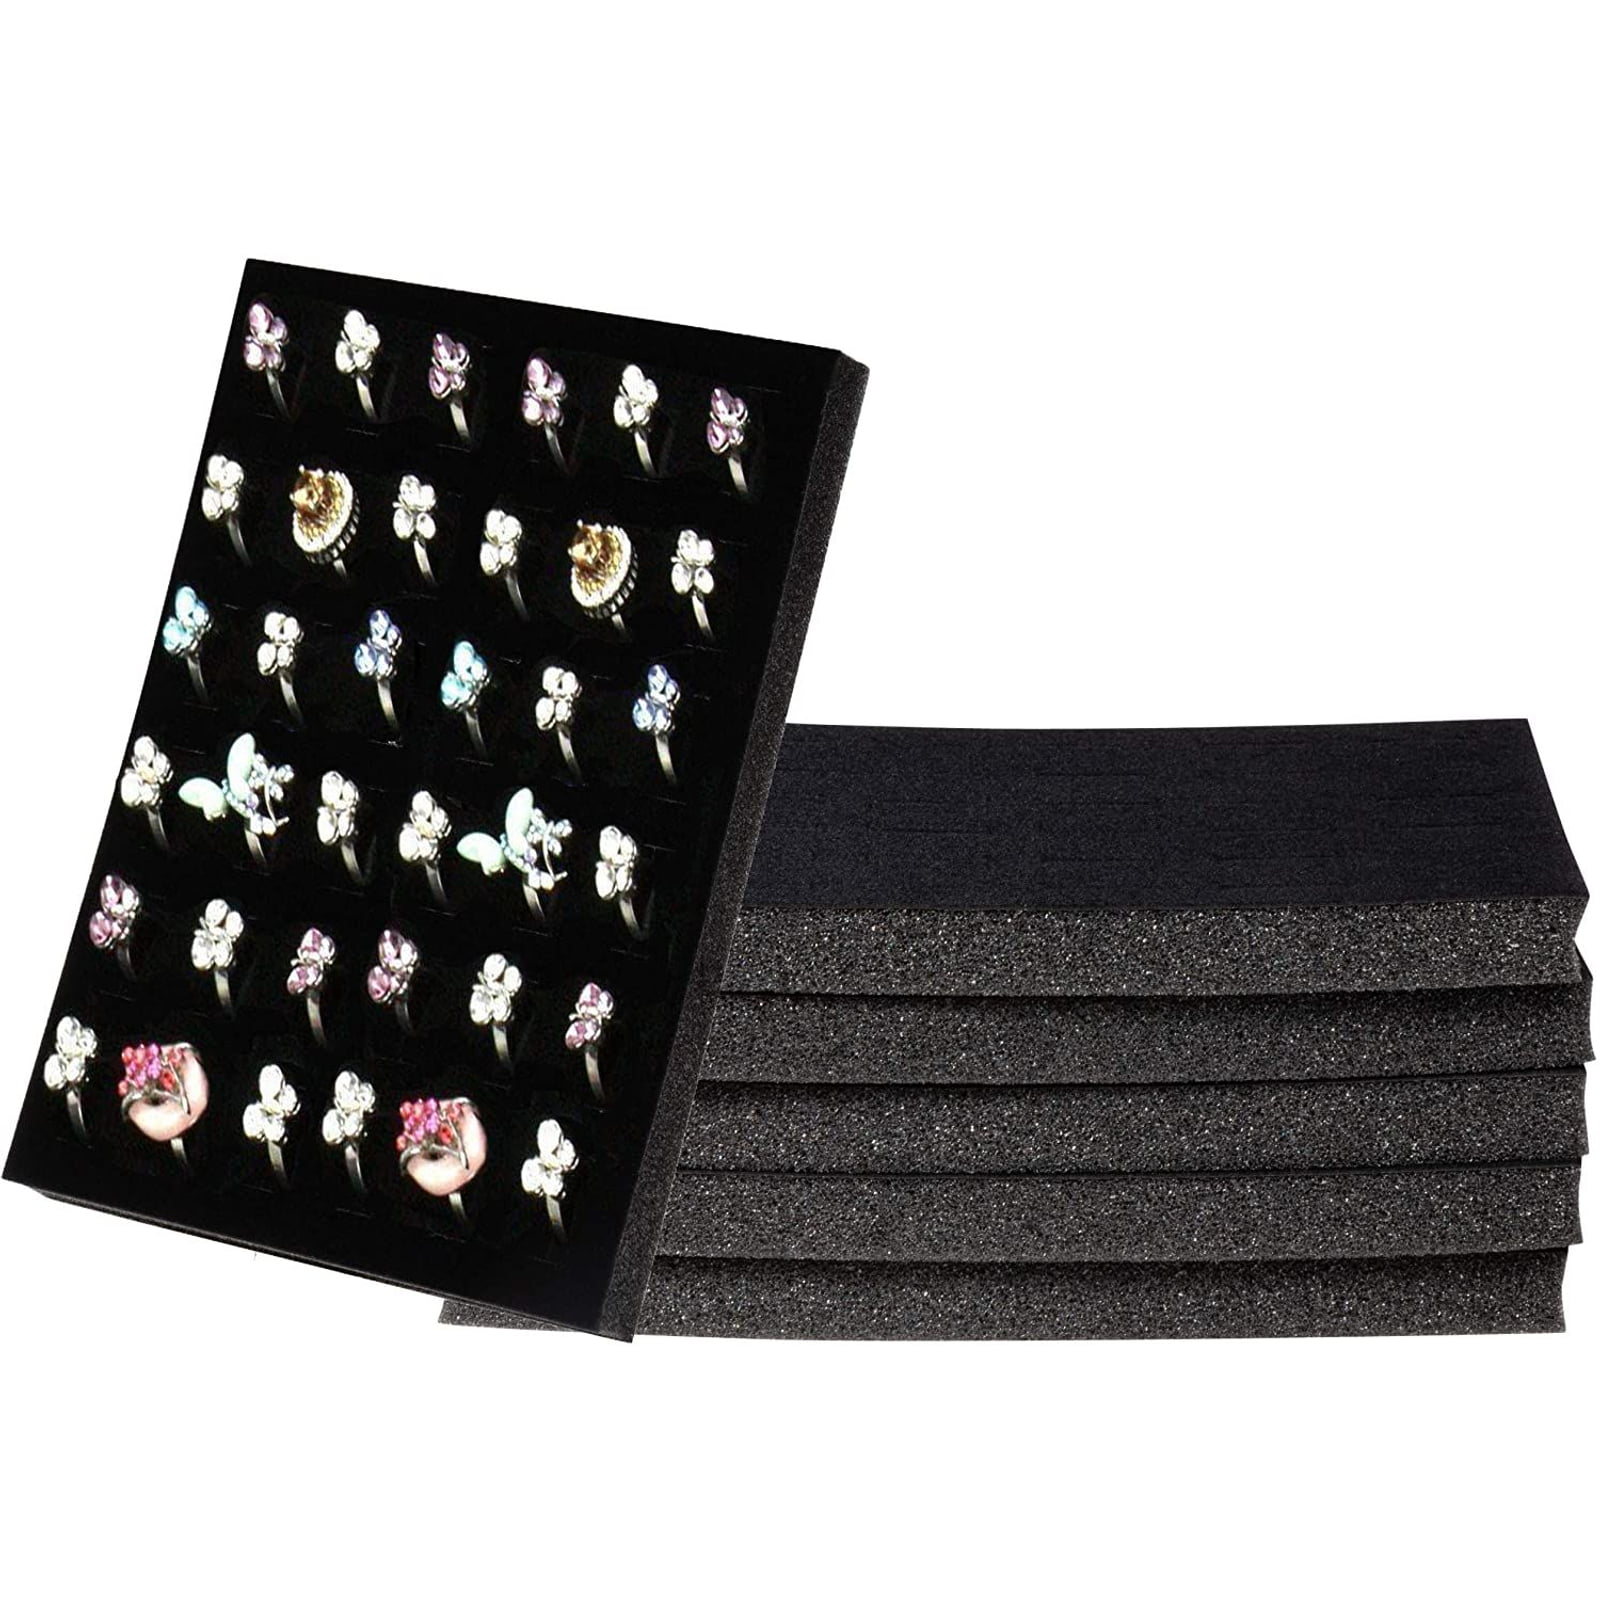 Jewelry Ring Display Tray Black Velvet Insert Box Holder Wood Case Organizer 